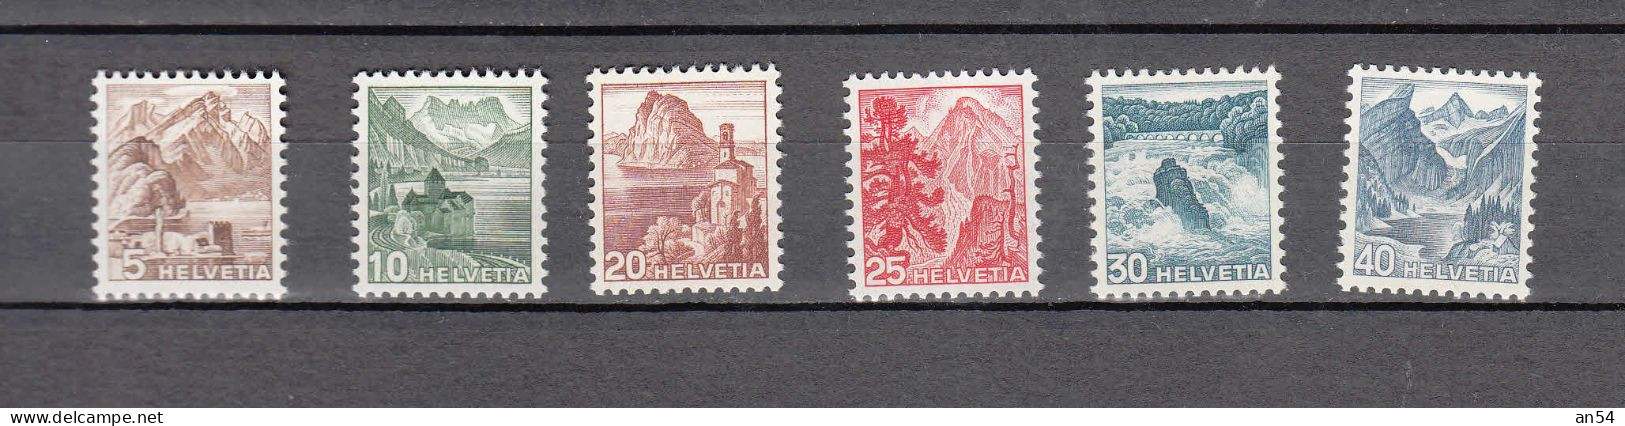 1948  N° 285 à 290     NEUFS**    COTE 60.00    CATALOGUE SBK - Unused Stamps